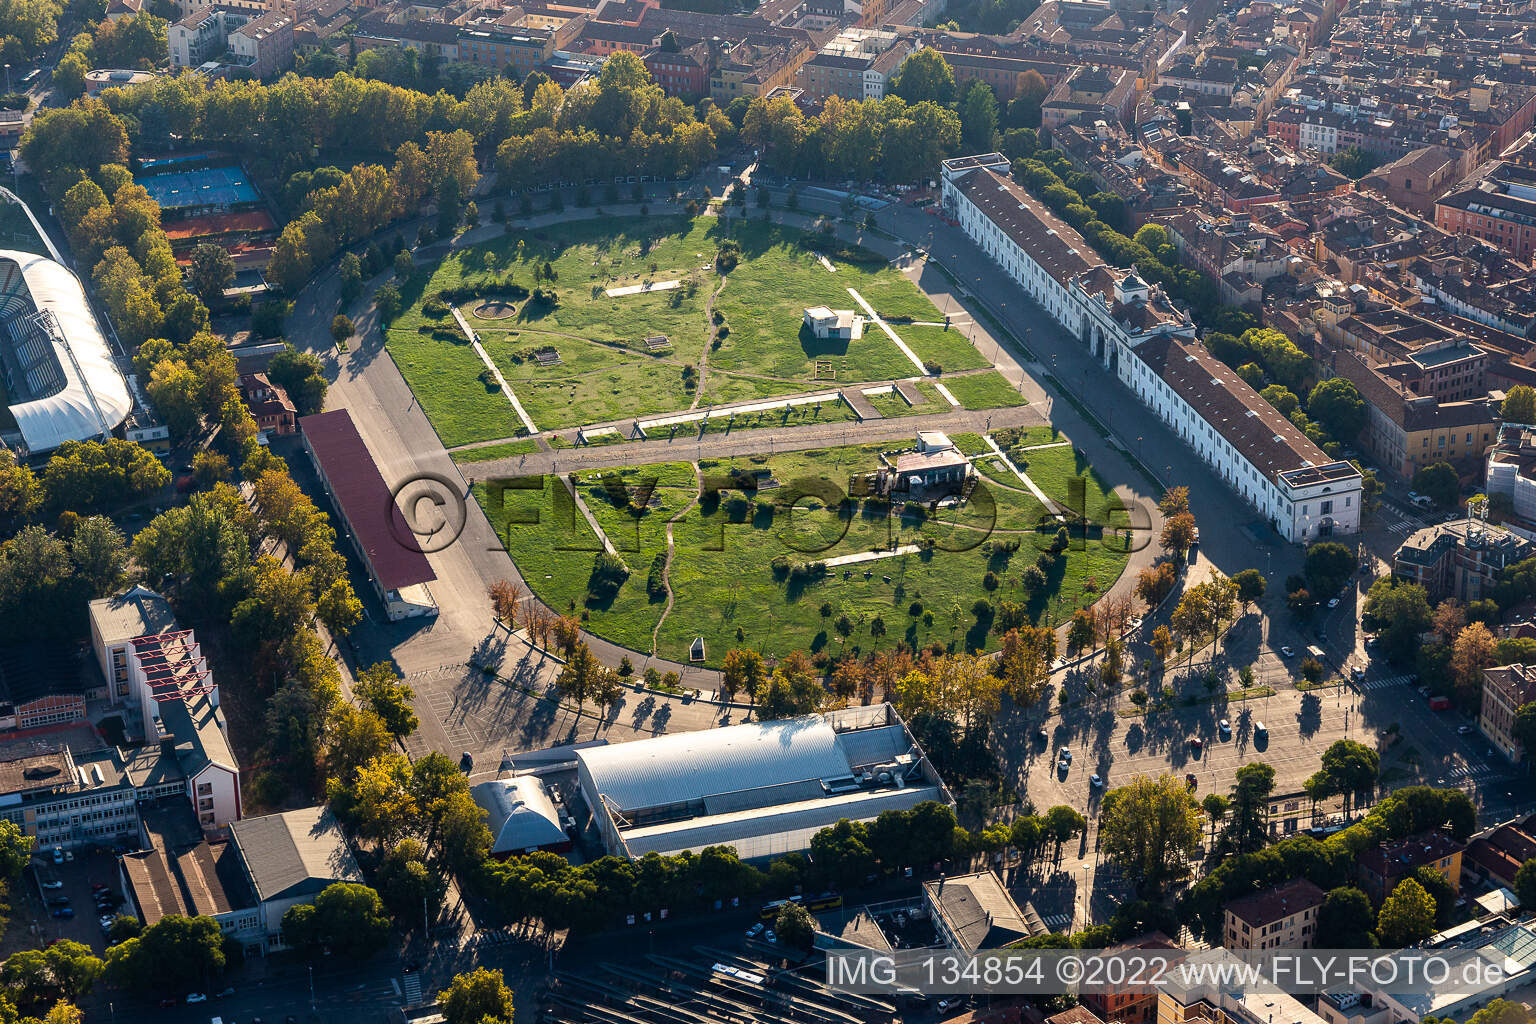 Parco archeologico Novi Ark in Modena, Italien